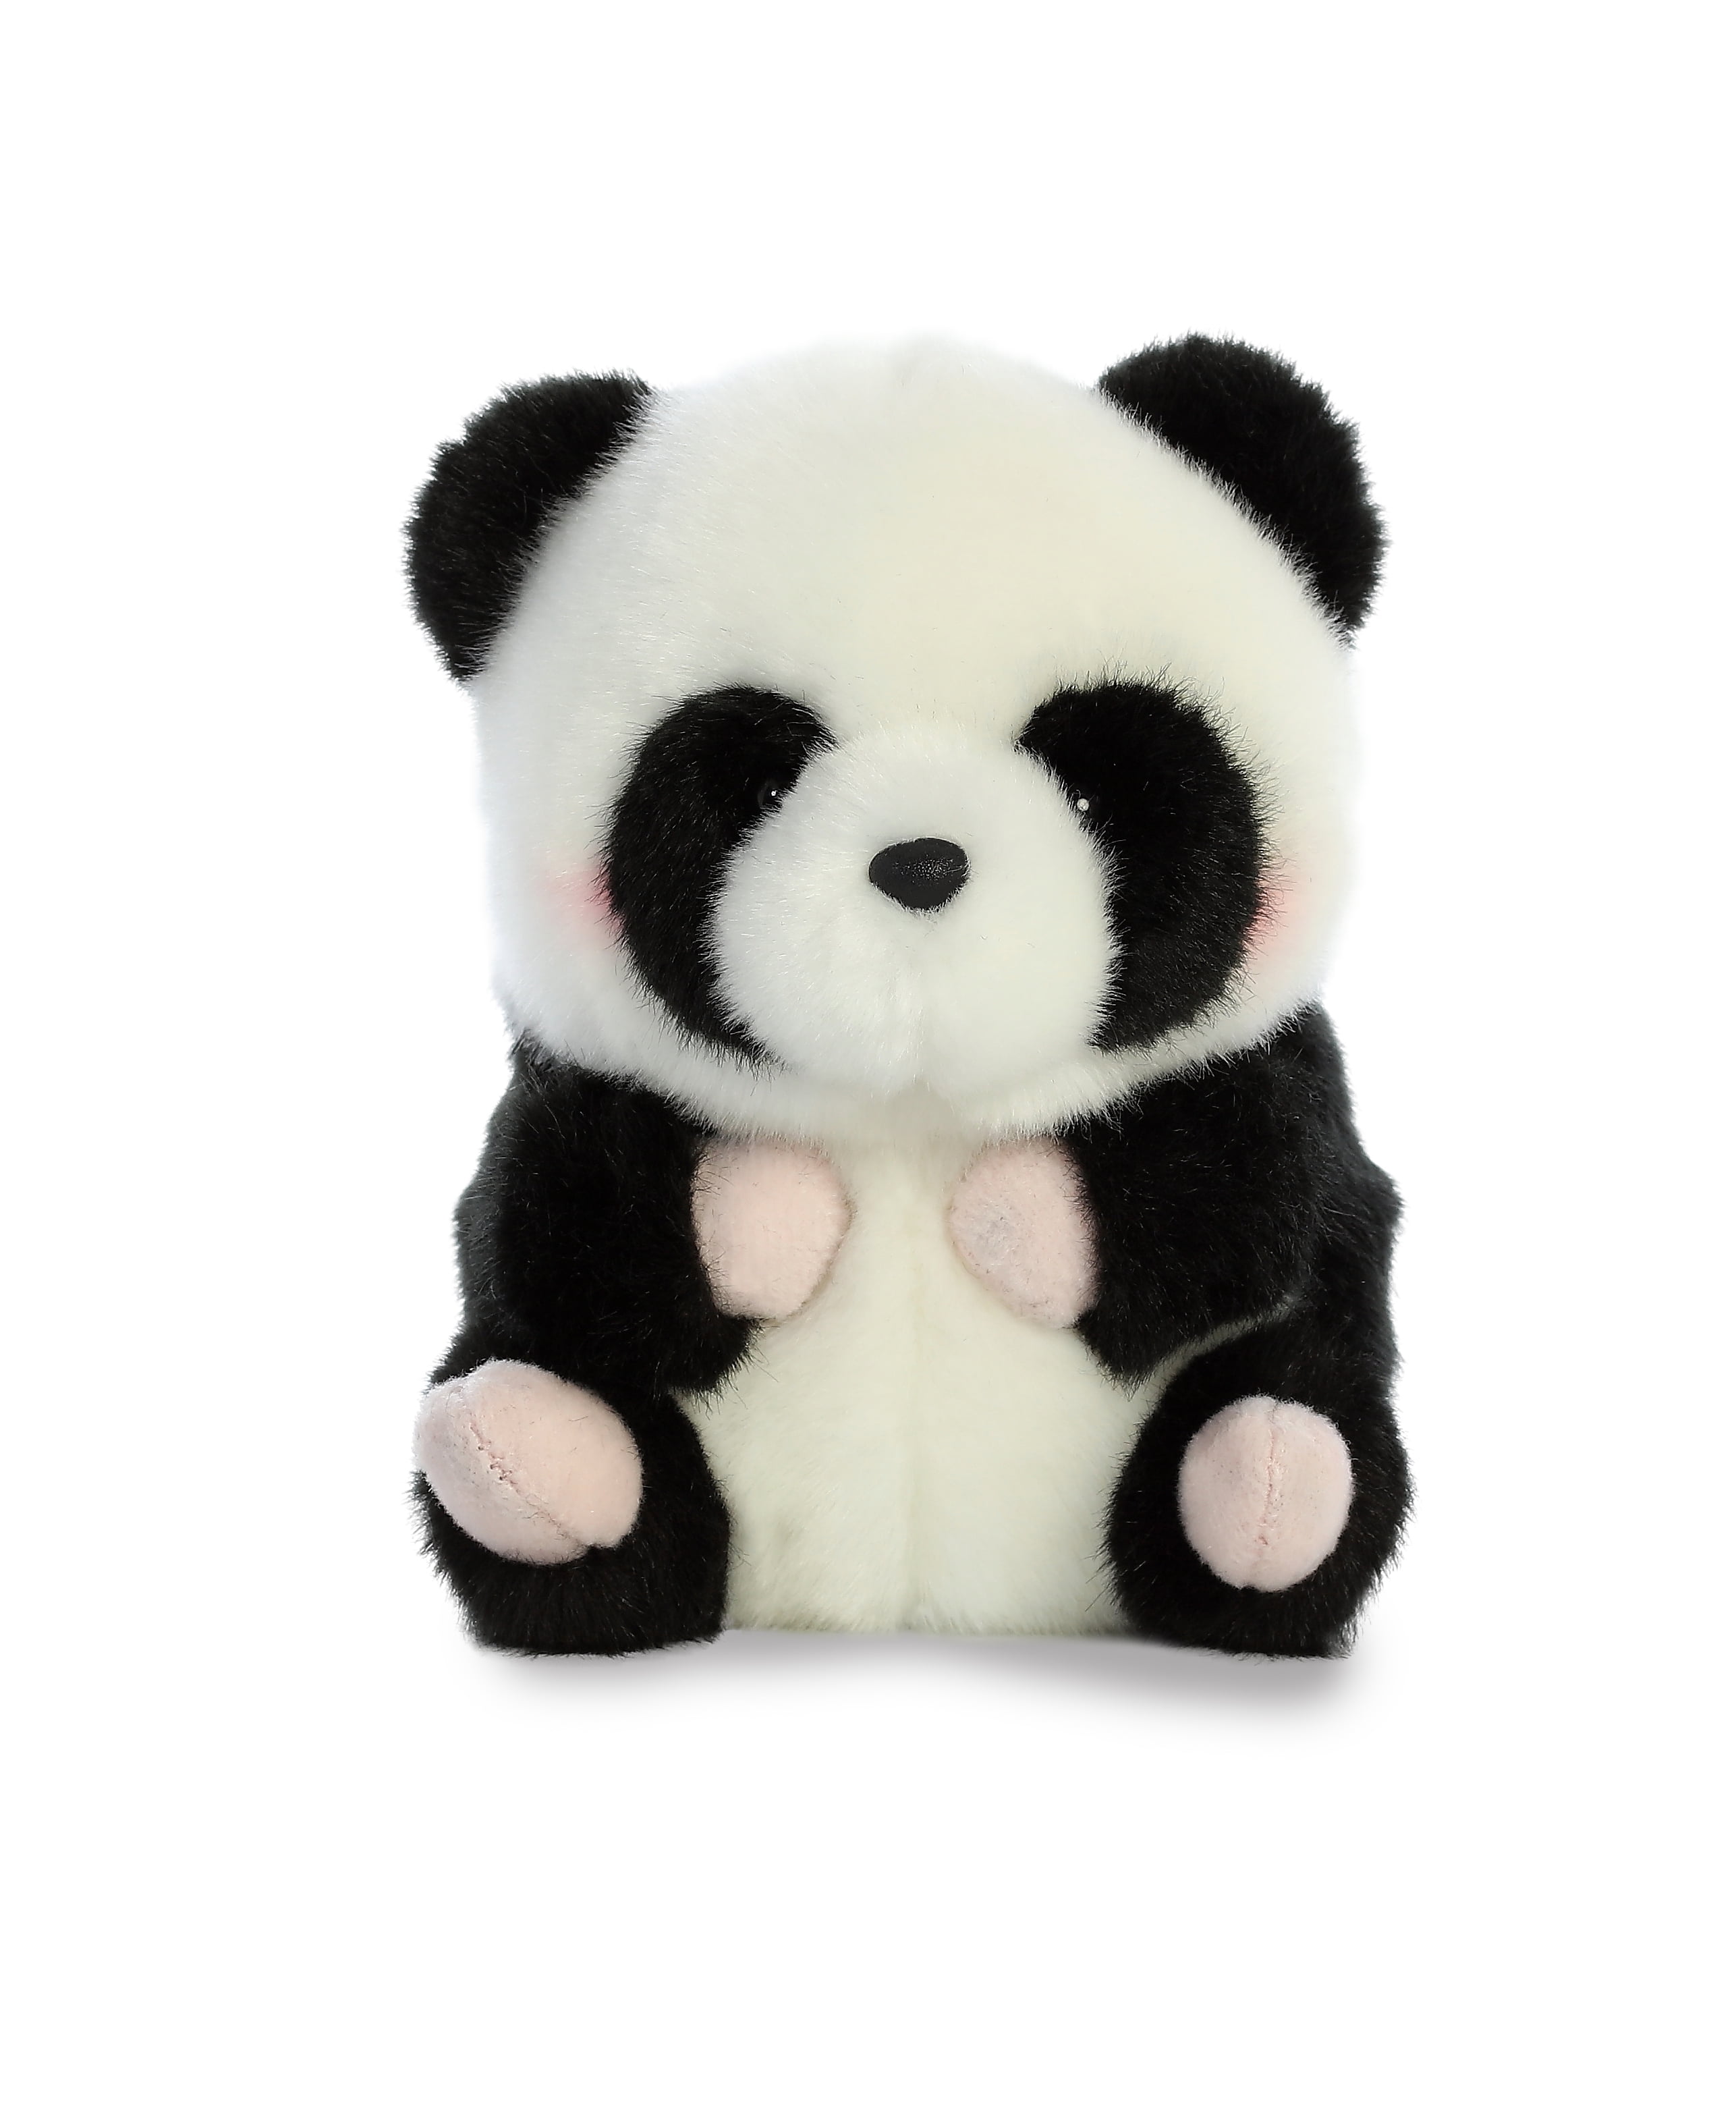 Soft Cute Plush Toy Collectible Animal Aurora Cuddly Friends 8 inch Panda 